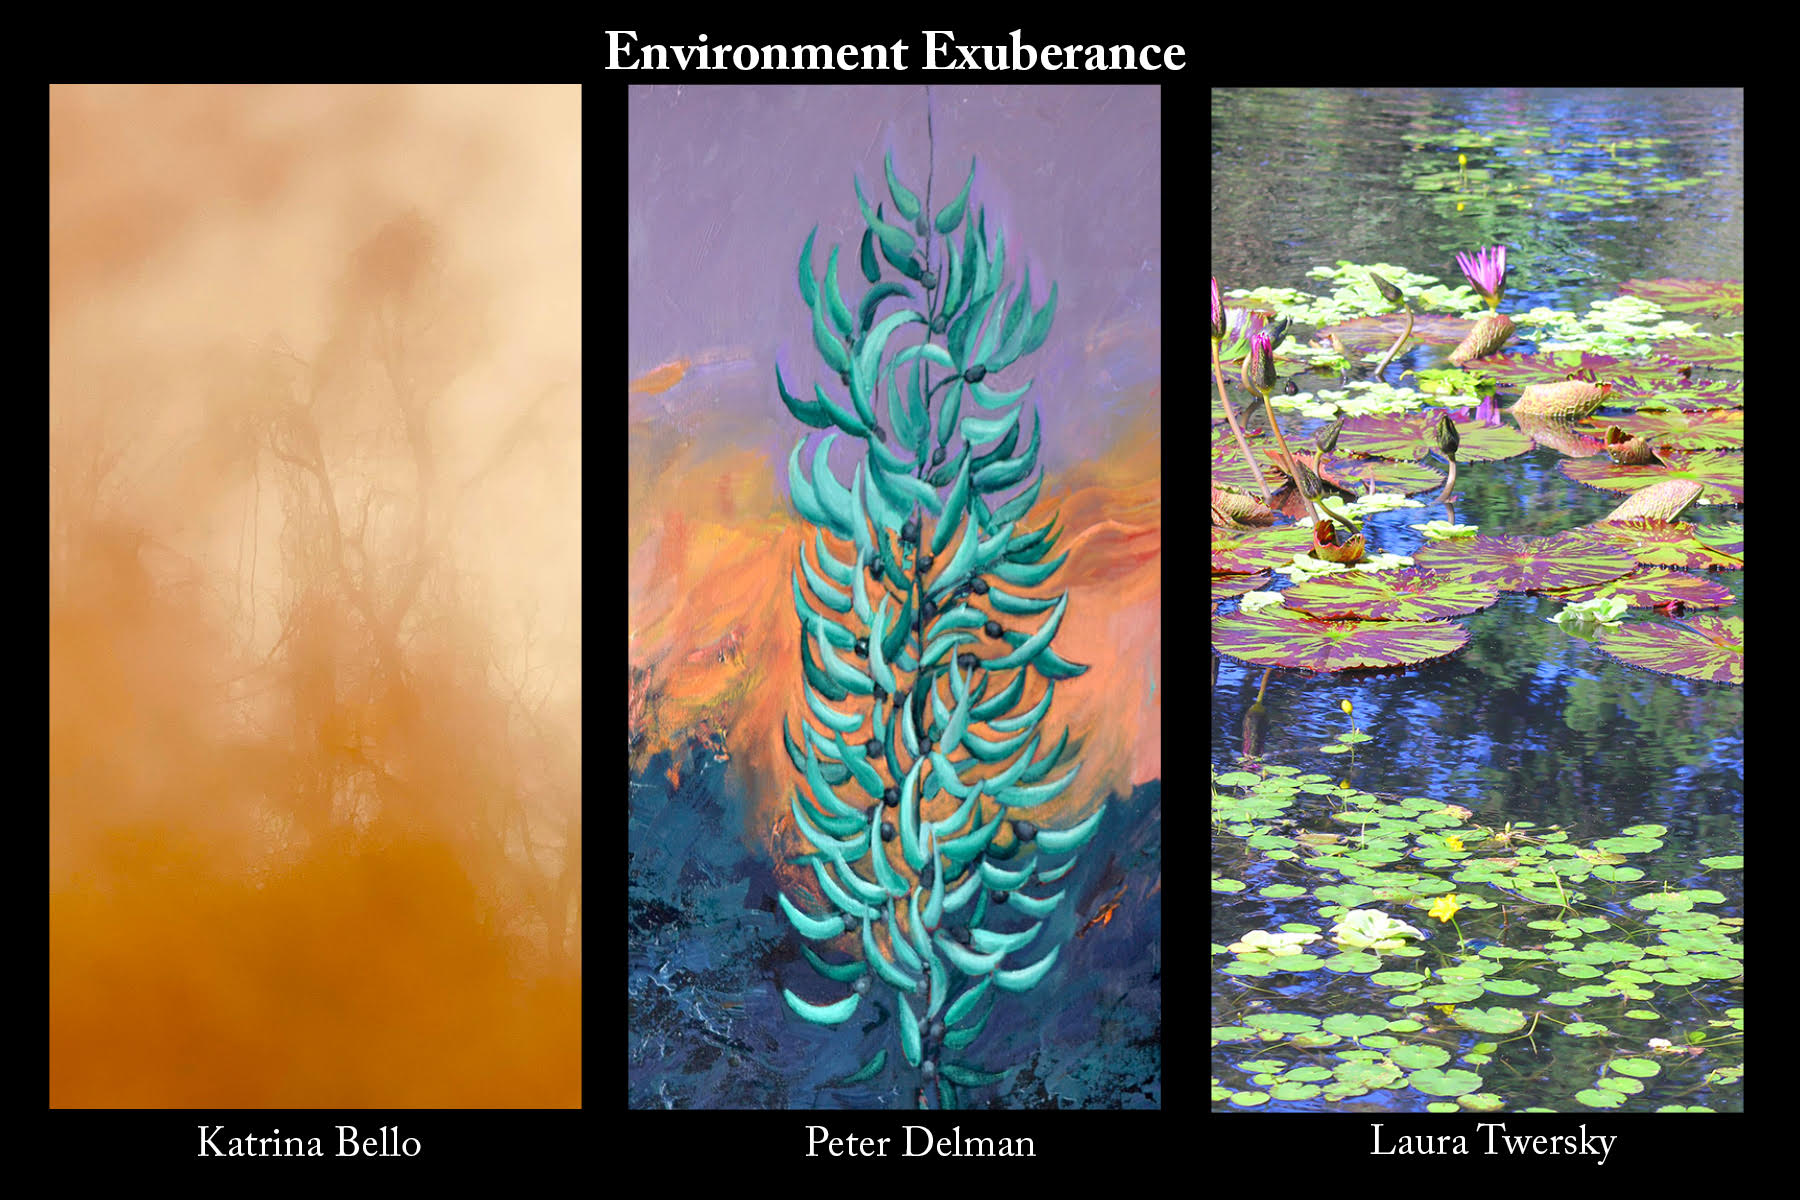 Environmental Exuberance art from Katrina Bello, Peter Delman, and Laura Twersky